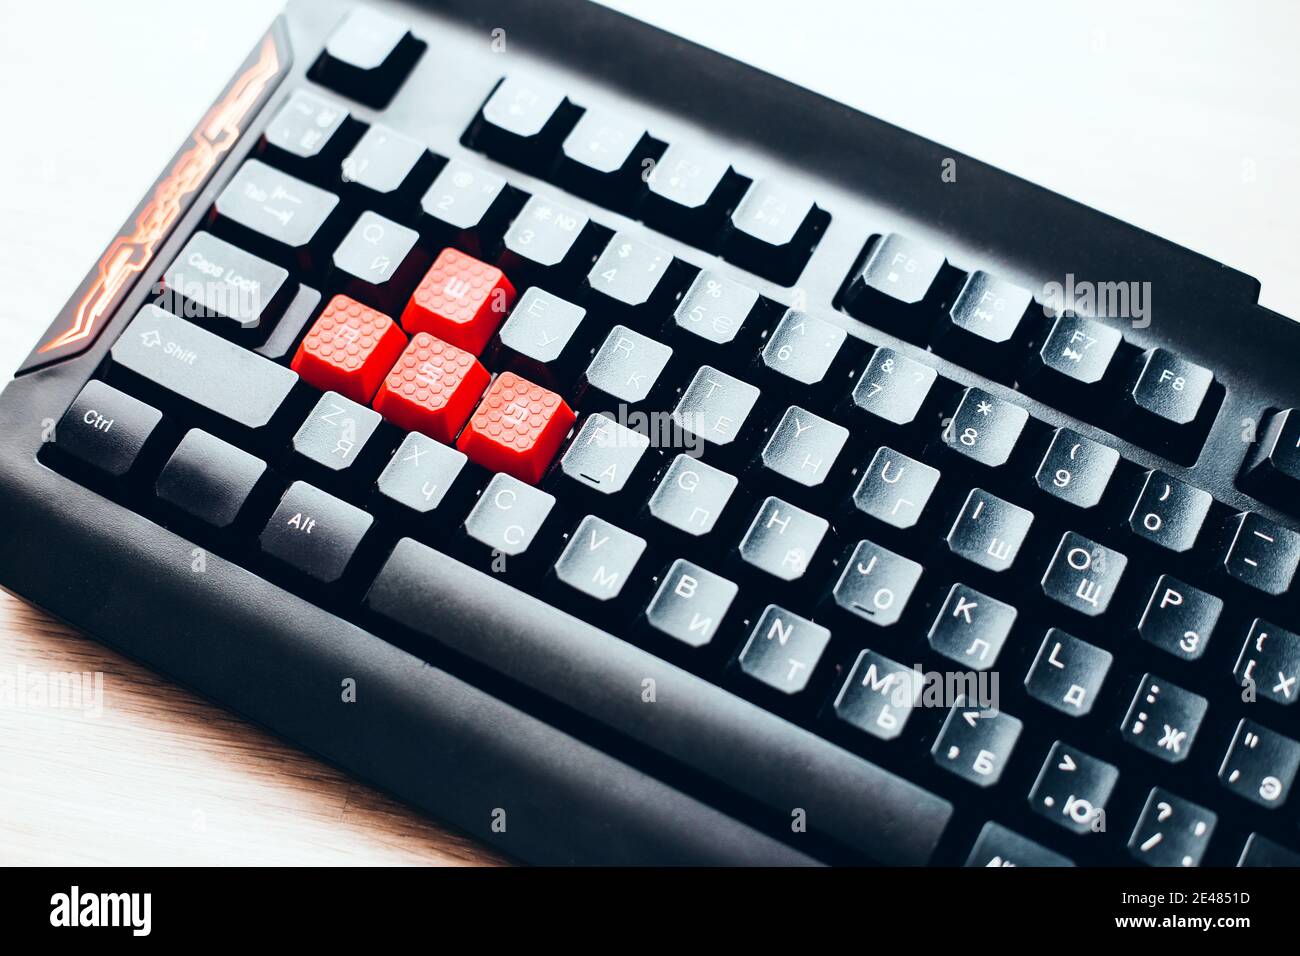 Black gaming keyboard with red AWSD keys - cyber sport work tool Stock Photo